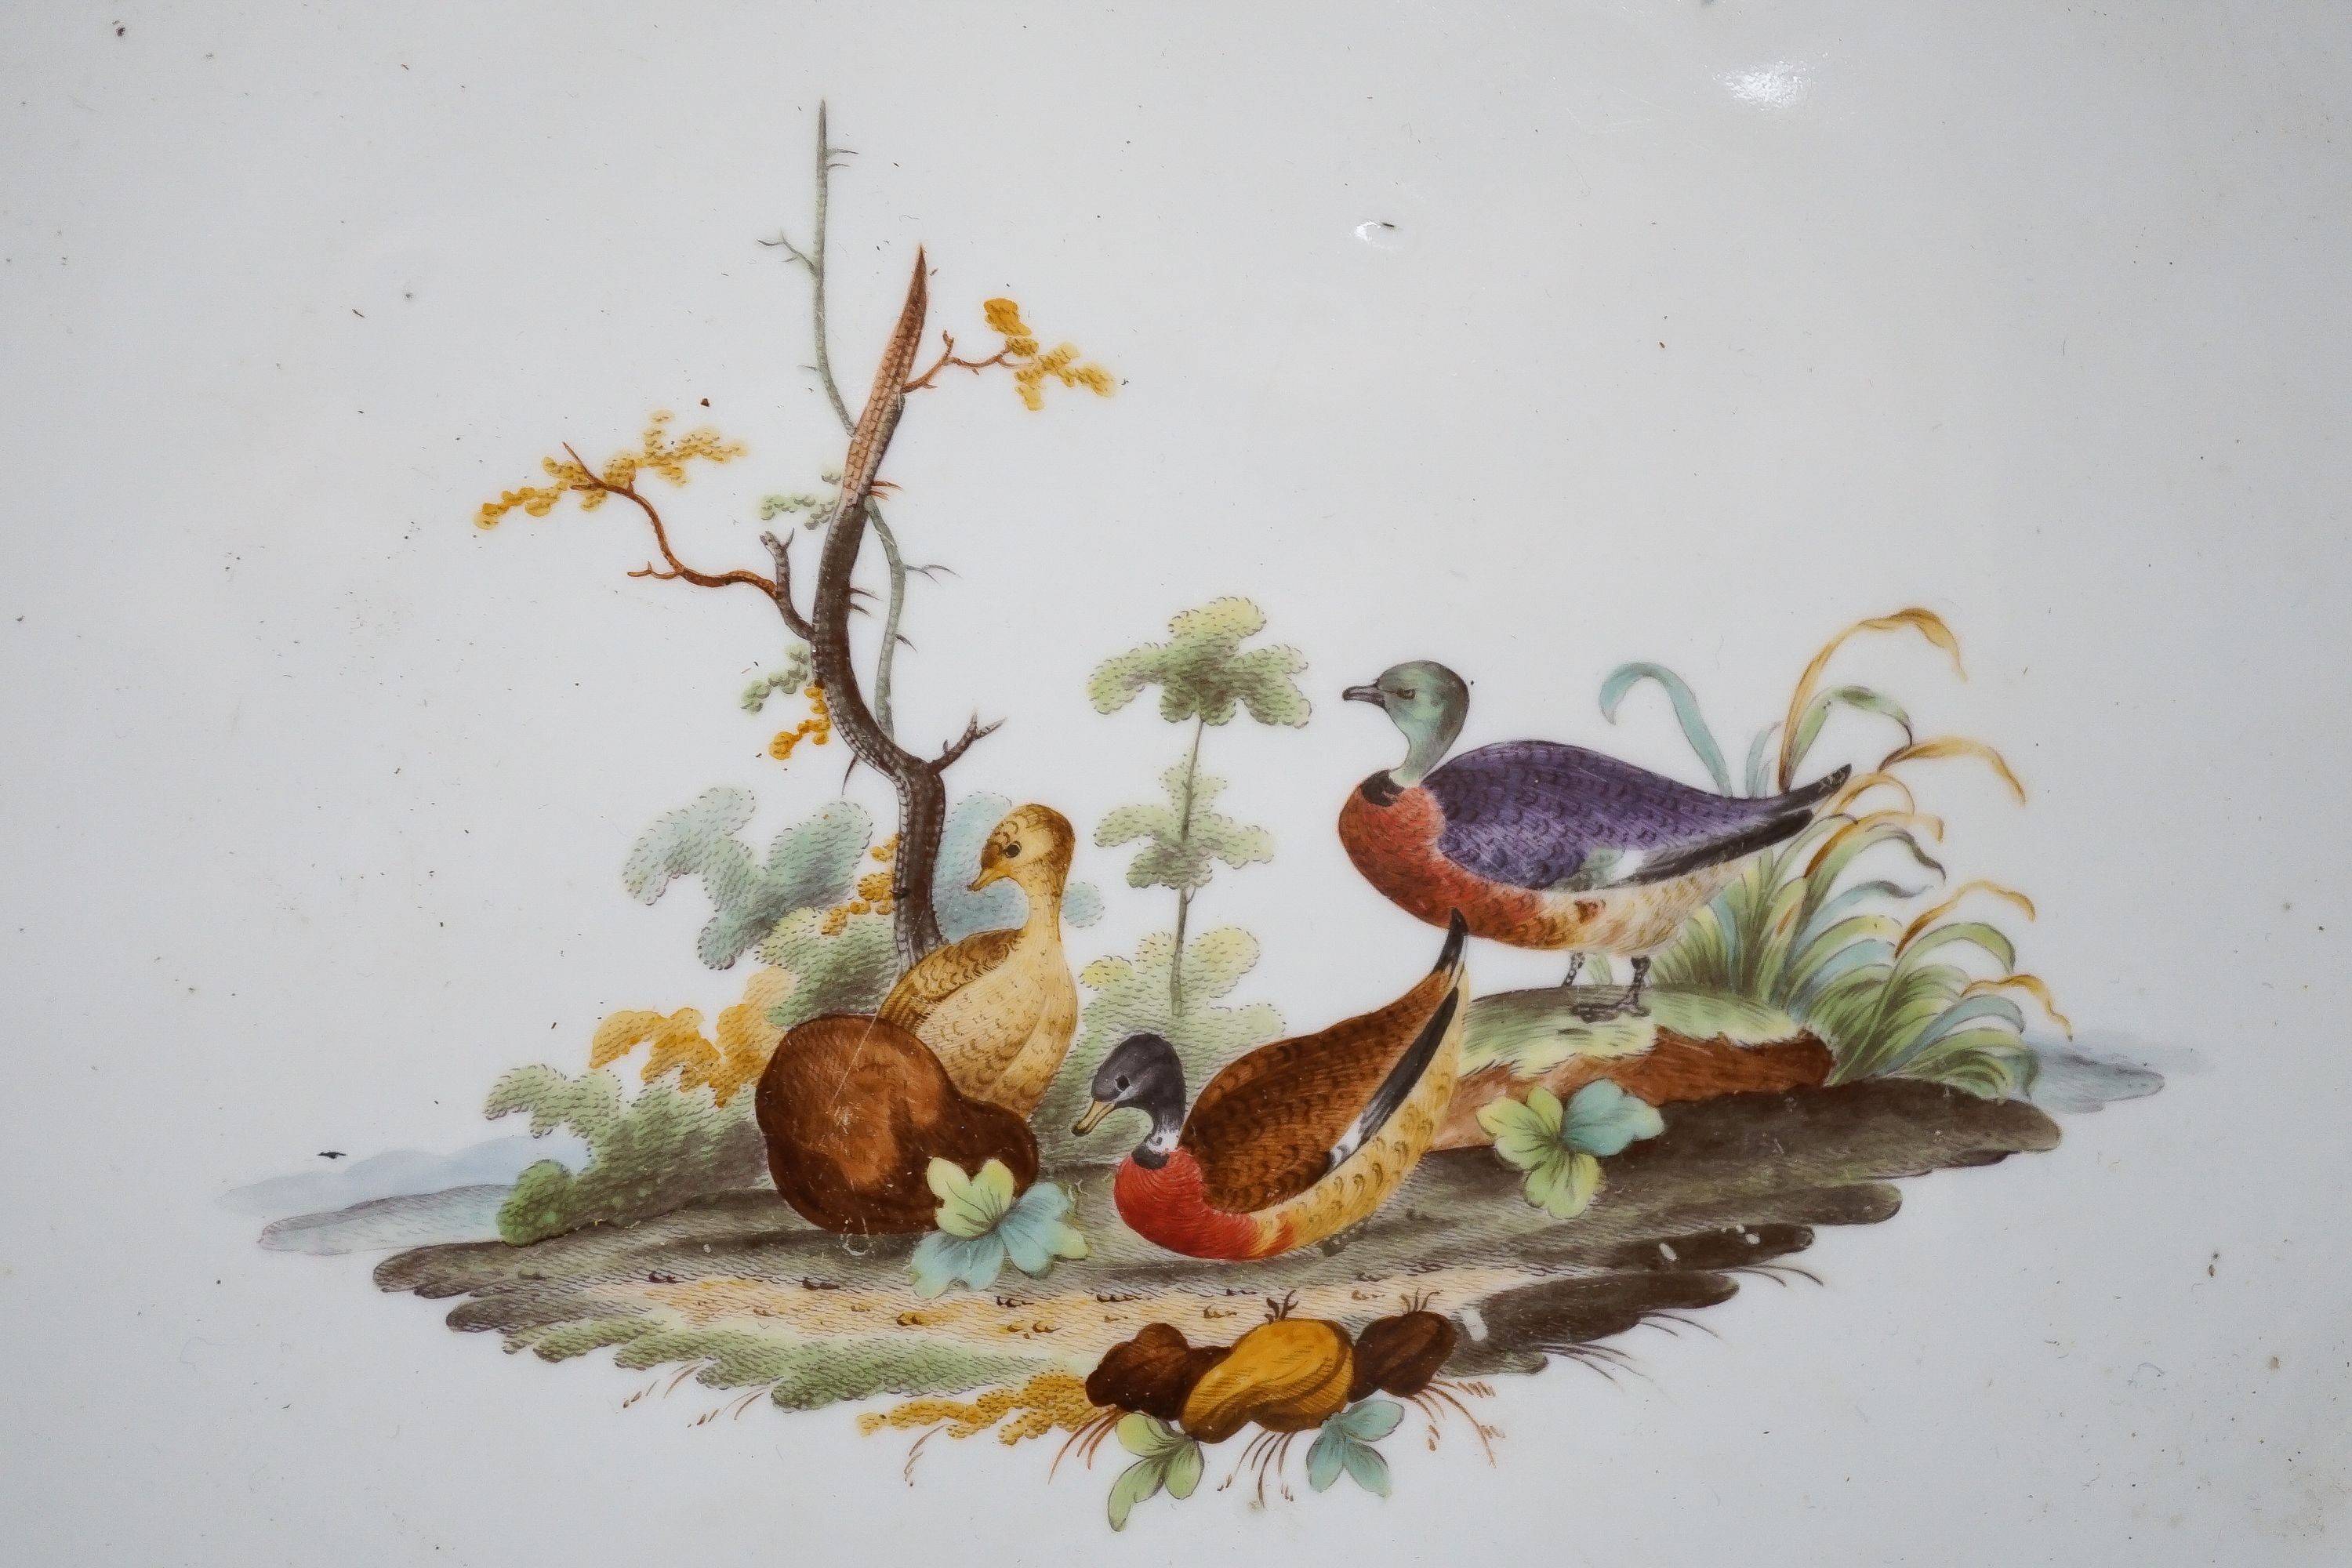 An 18th century Furstenberg bird painted porcelain dish 34cm